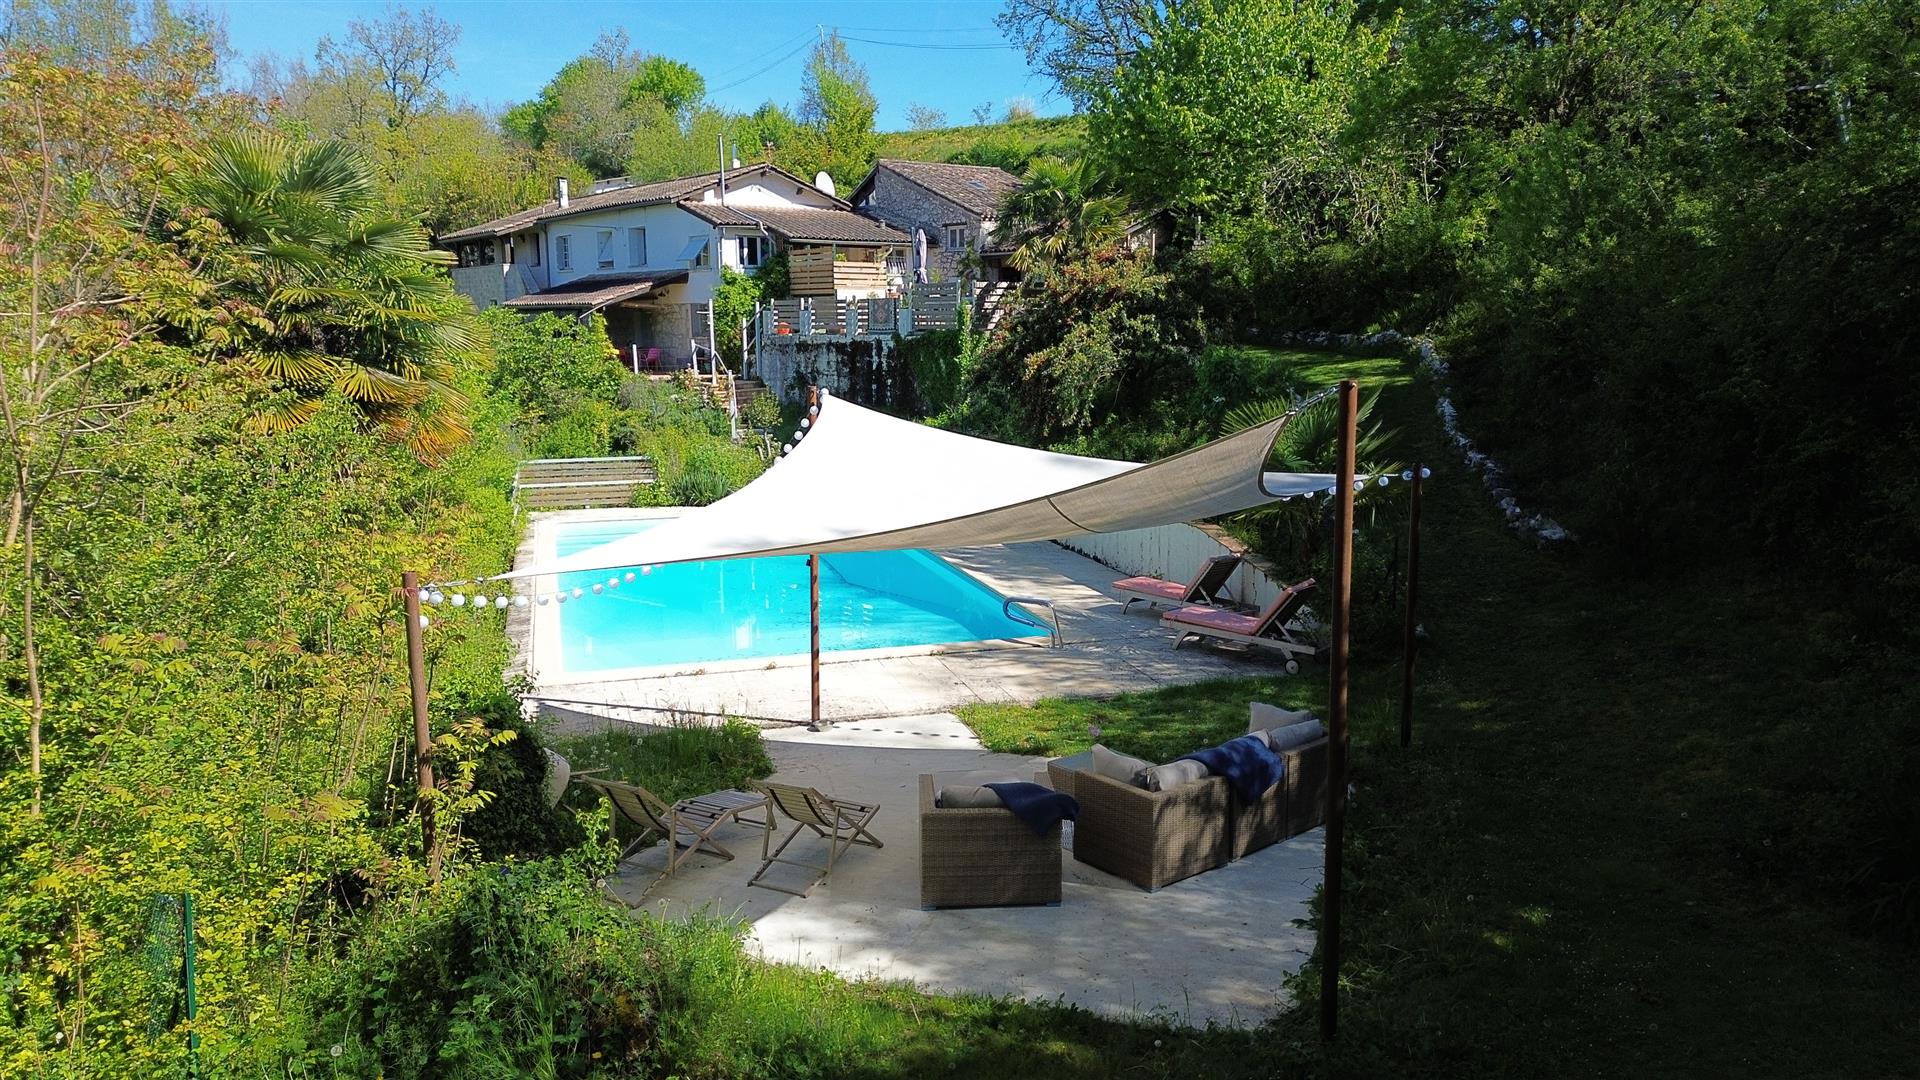  Tarn et Garonne Maison de 3 chambres avec piscine, 2+hectares vue incroyable